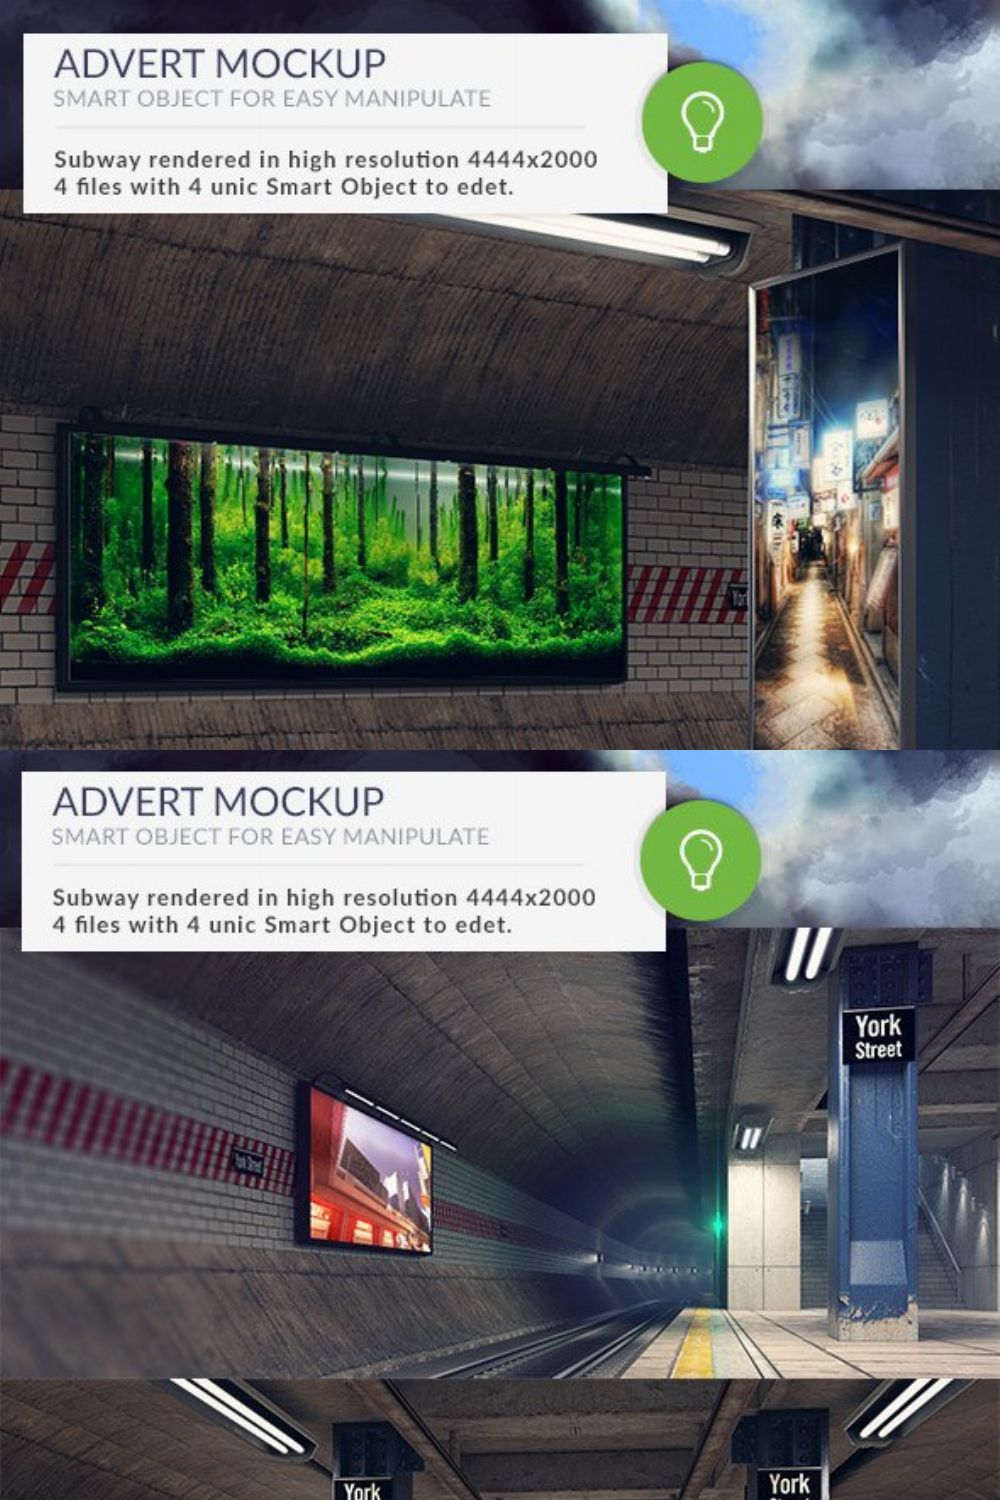 Subway Station Mockups Adverts pinterest preview image.